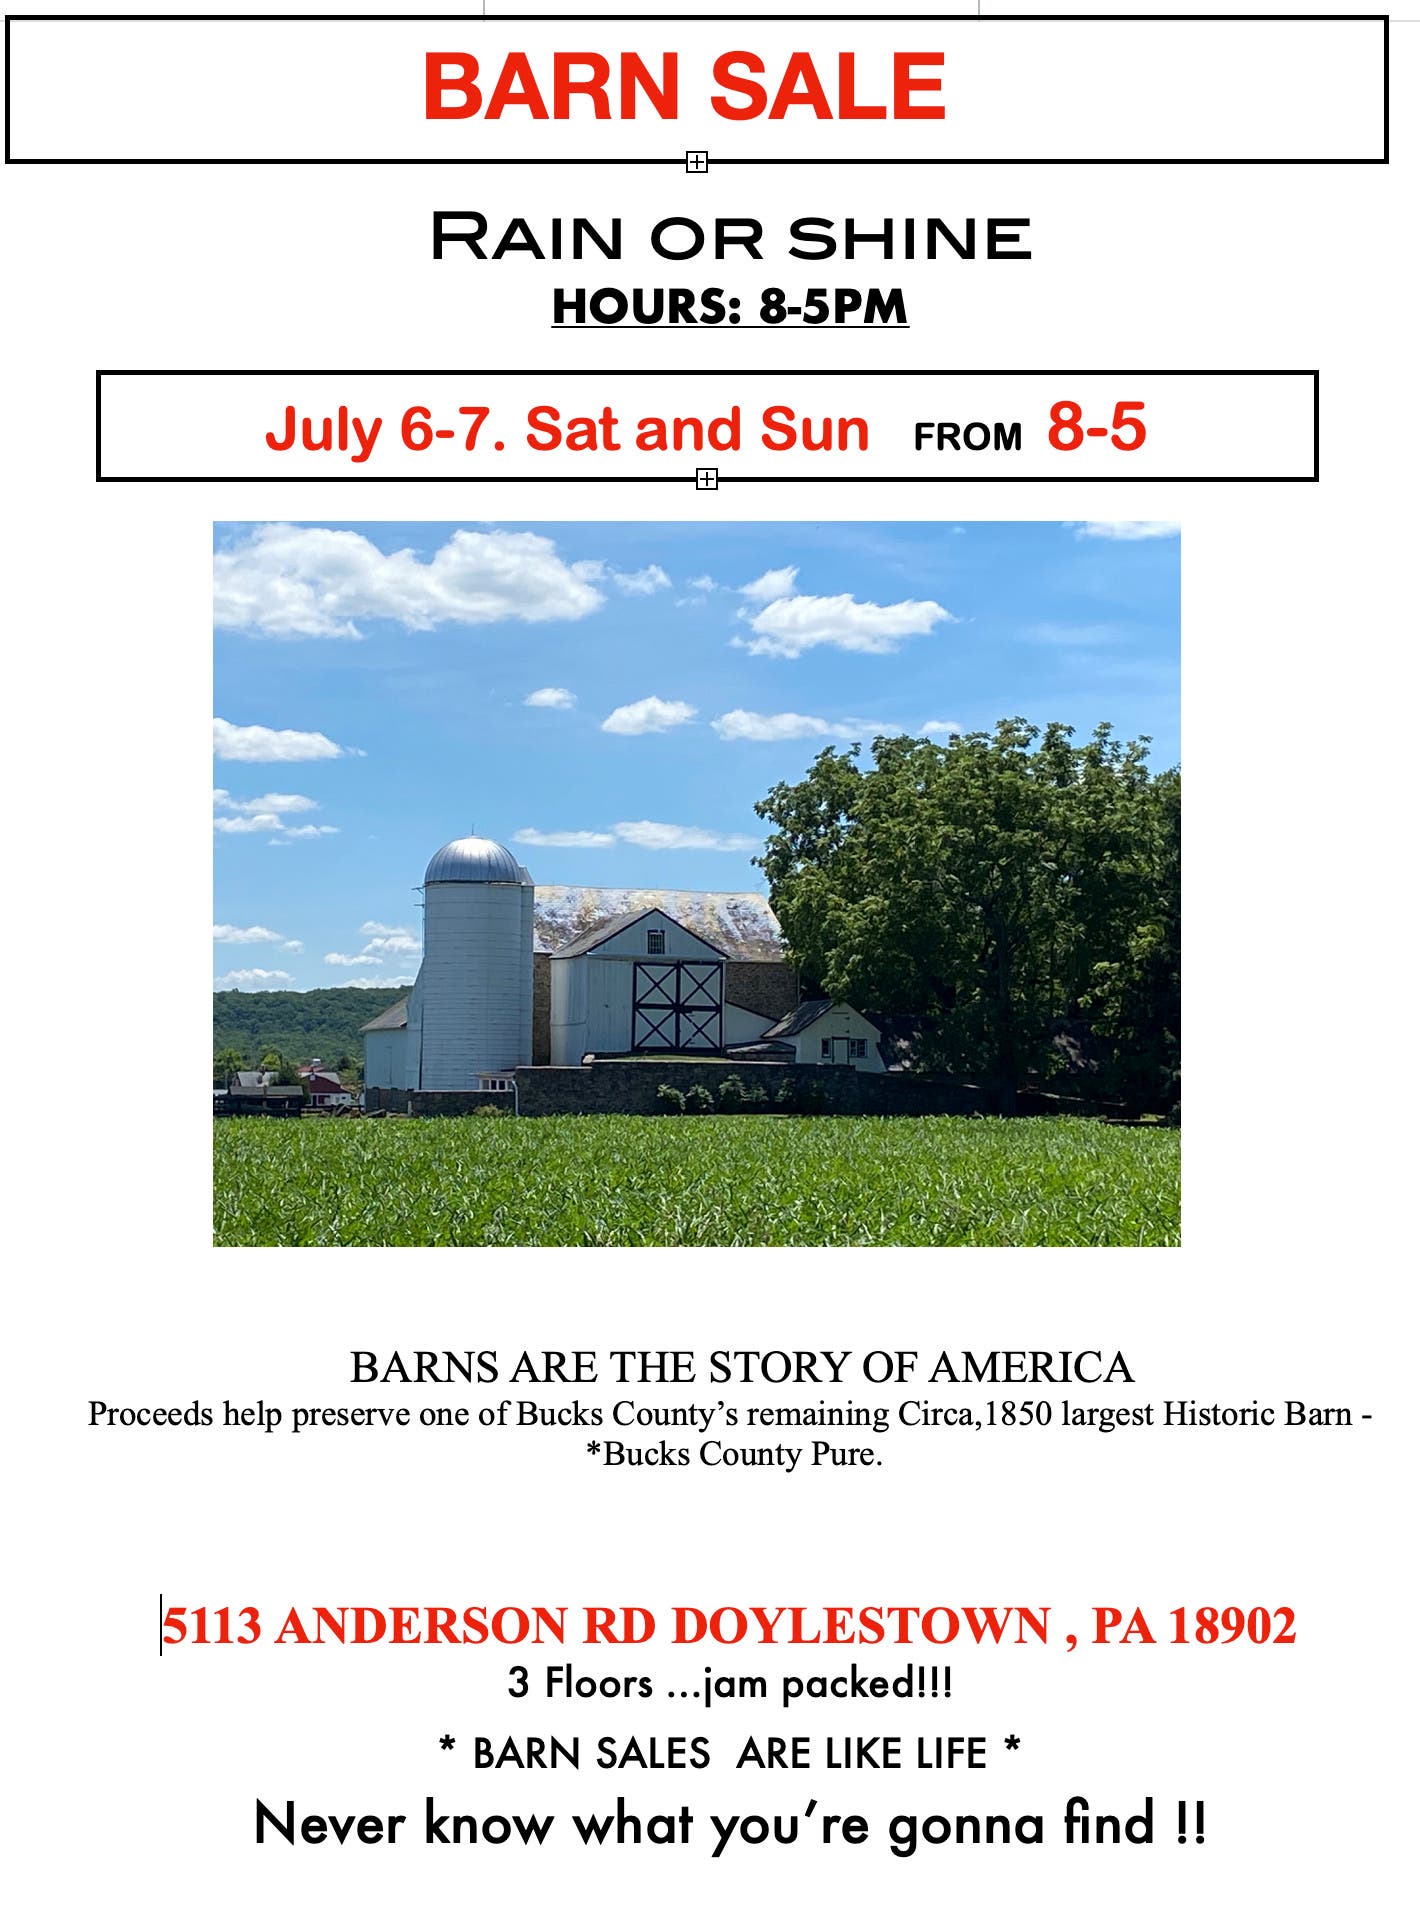 Barn sale in Historic Bucks County Barn